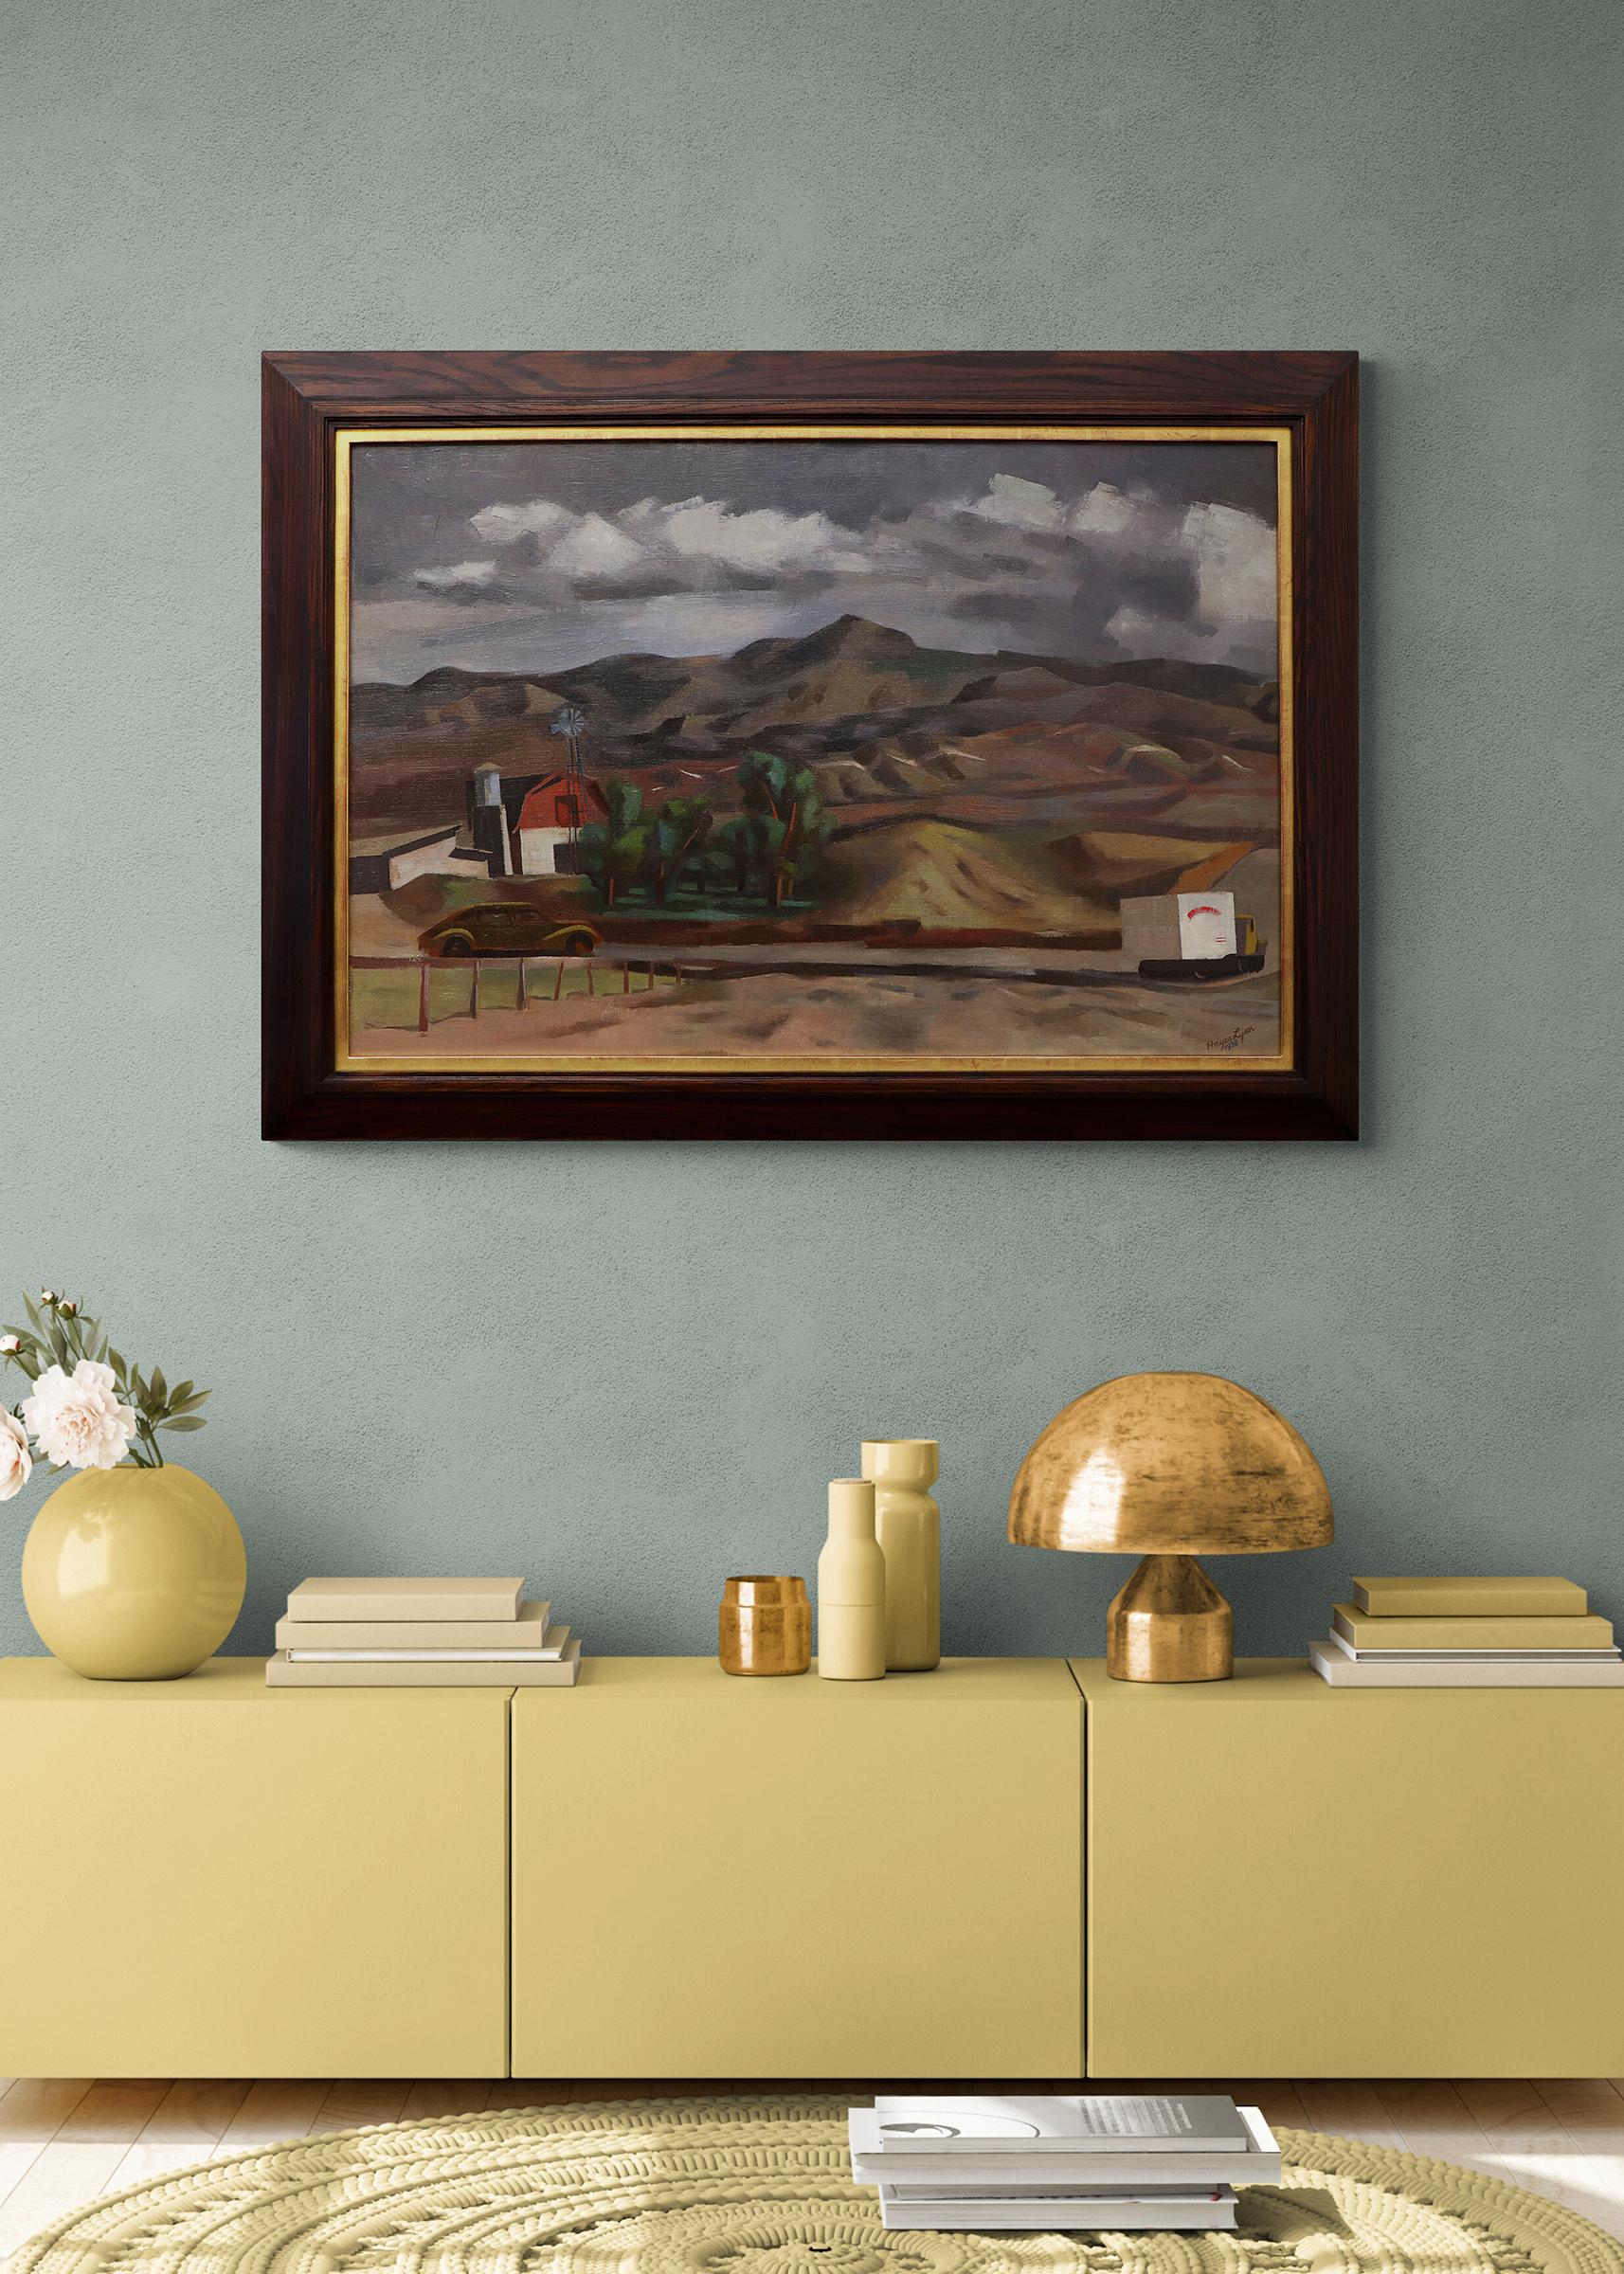 The Hillside, Colorado, 1930s Landscape Oil Painting, Hillside Farm with Truck 11